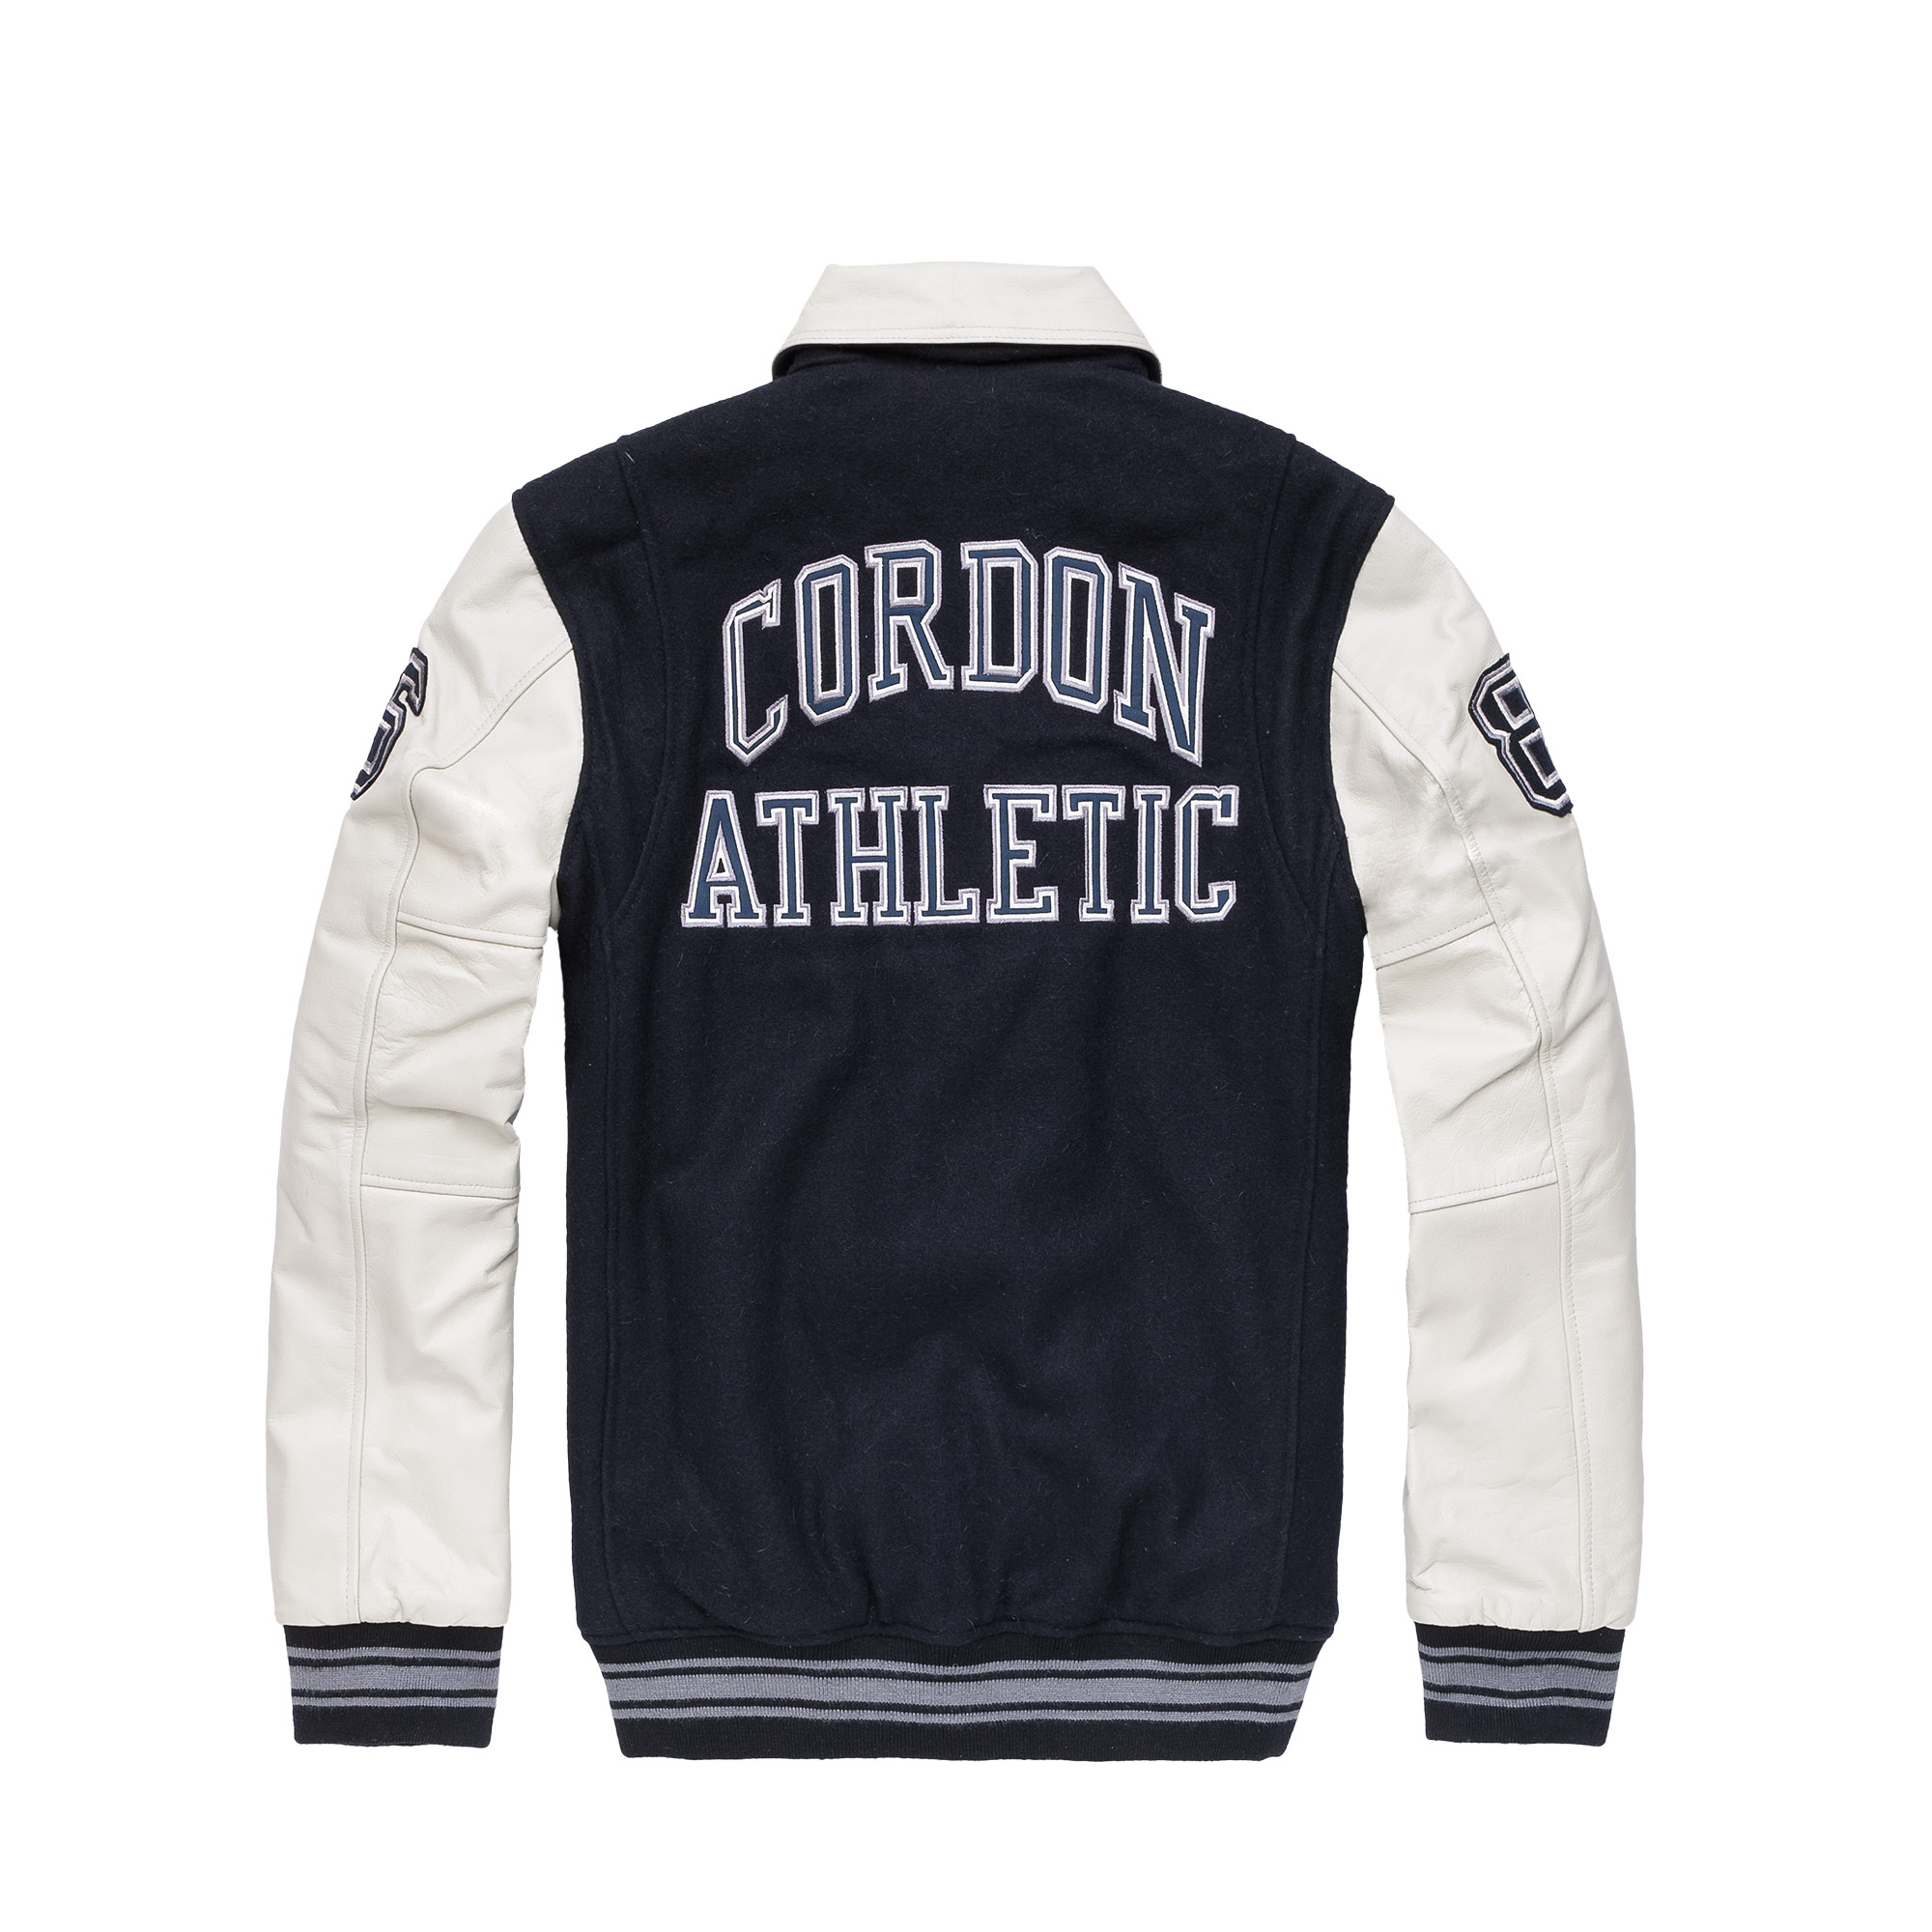 Cordon Bronx Jacket AUSVERKAUFT - coming soon - ab Juni